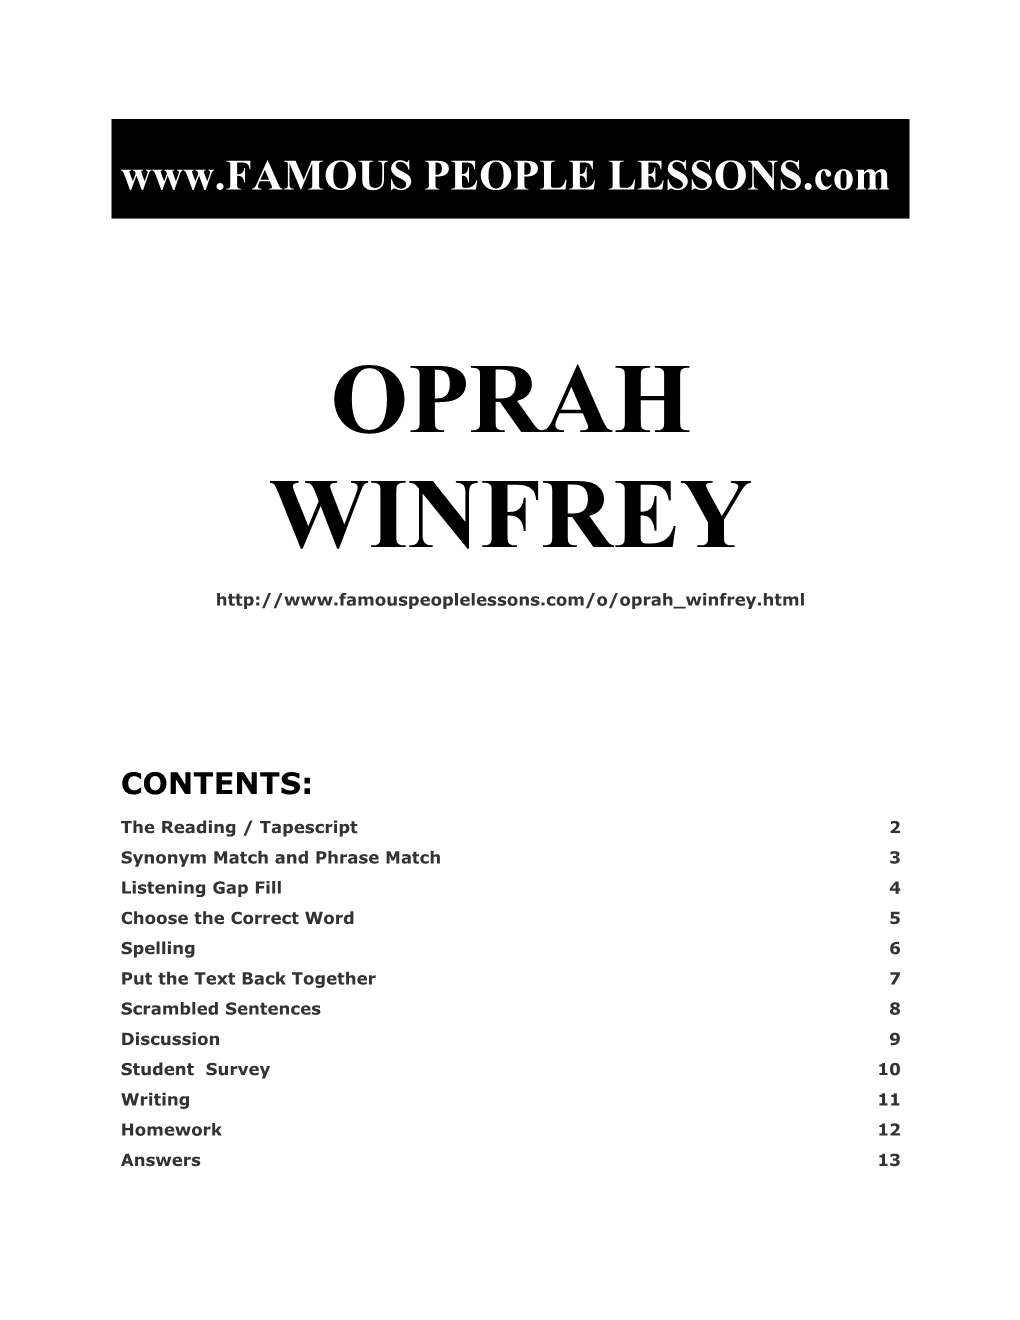 Famous People Lessons - Oprah Winfrey